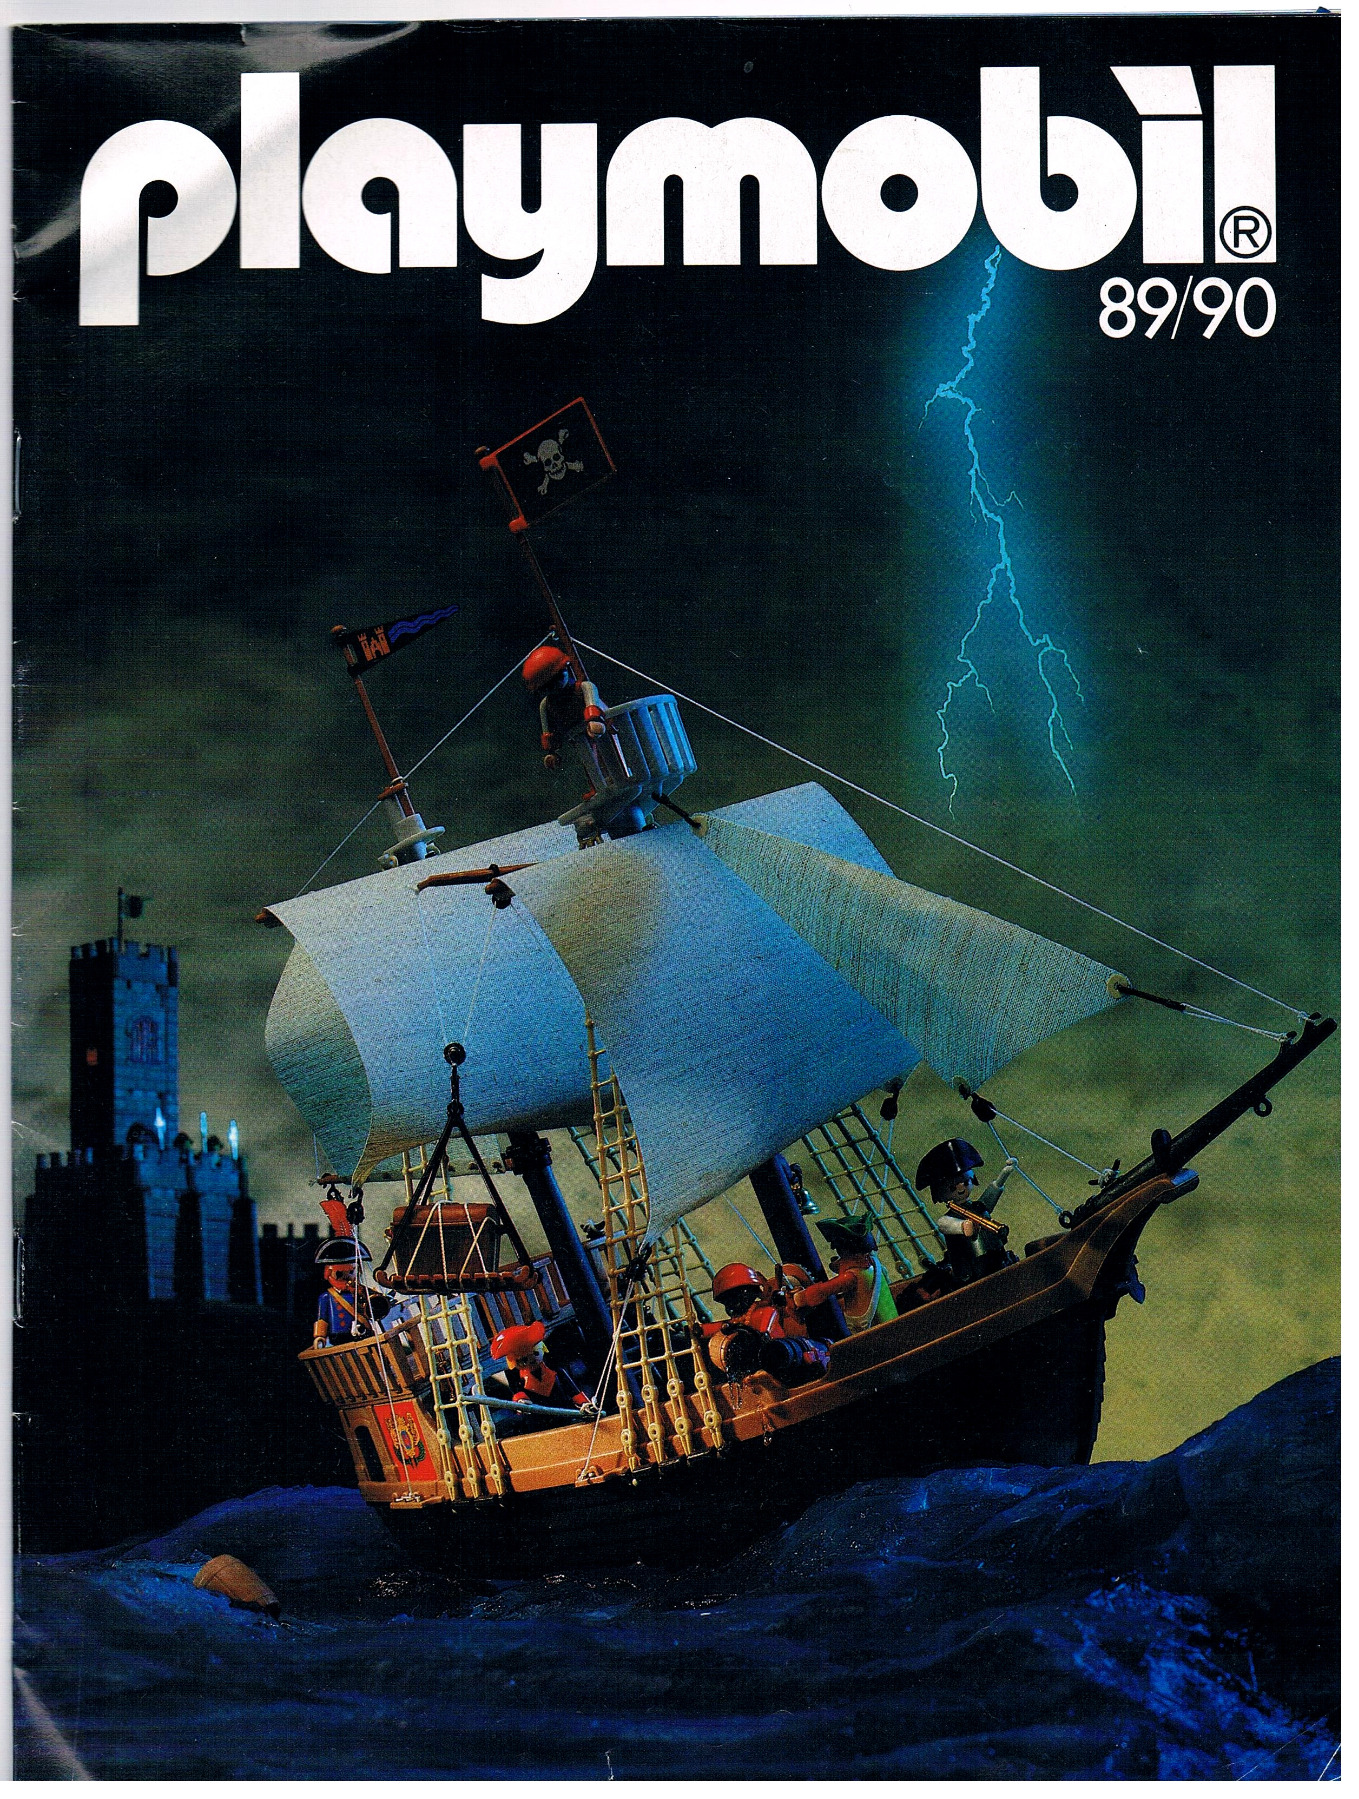 Playmobil catalog 89/90 - 1989/1990